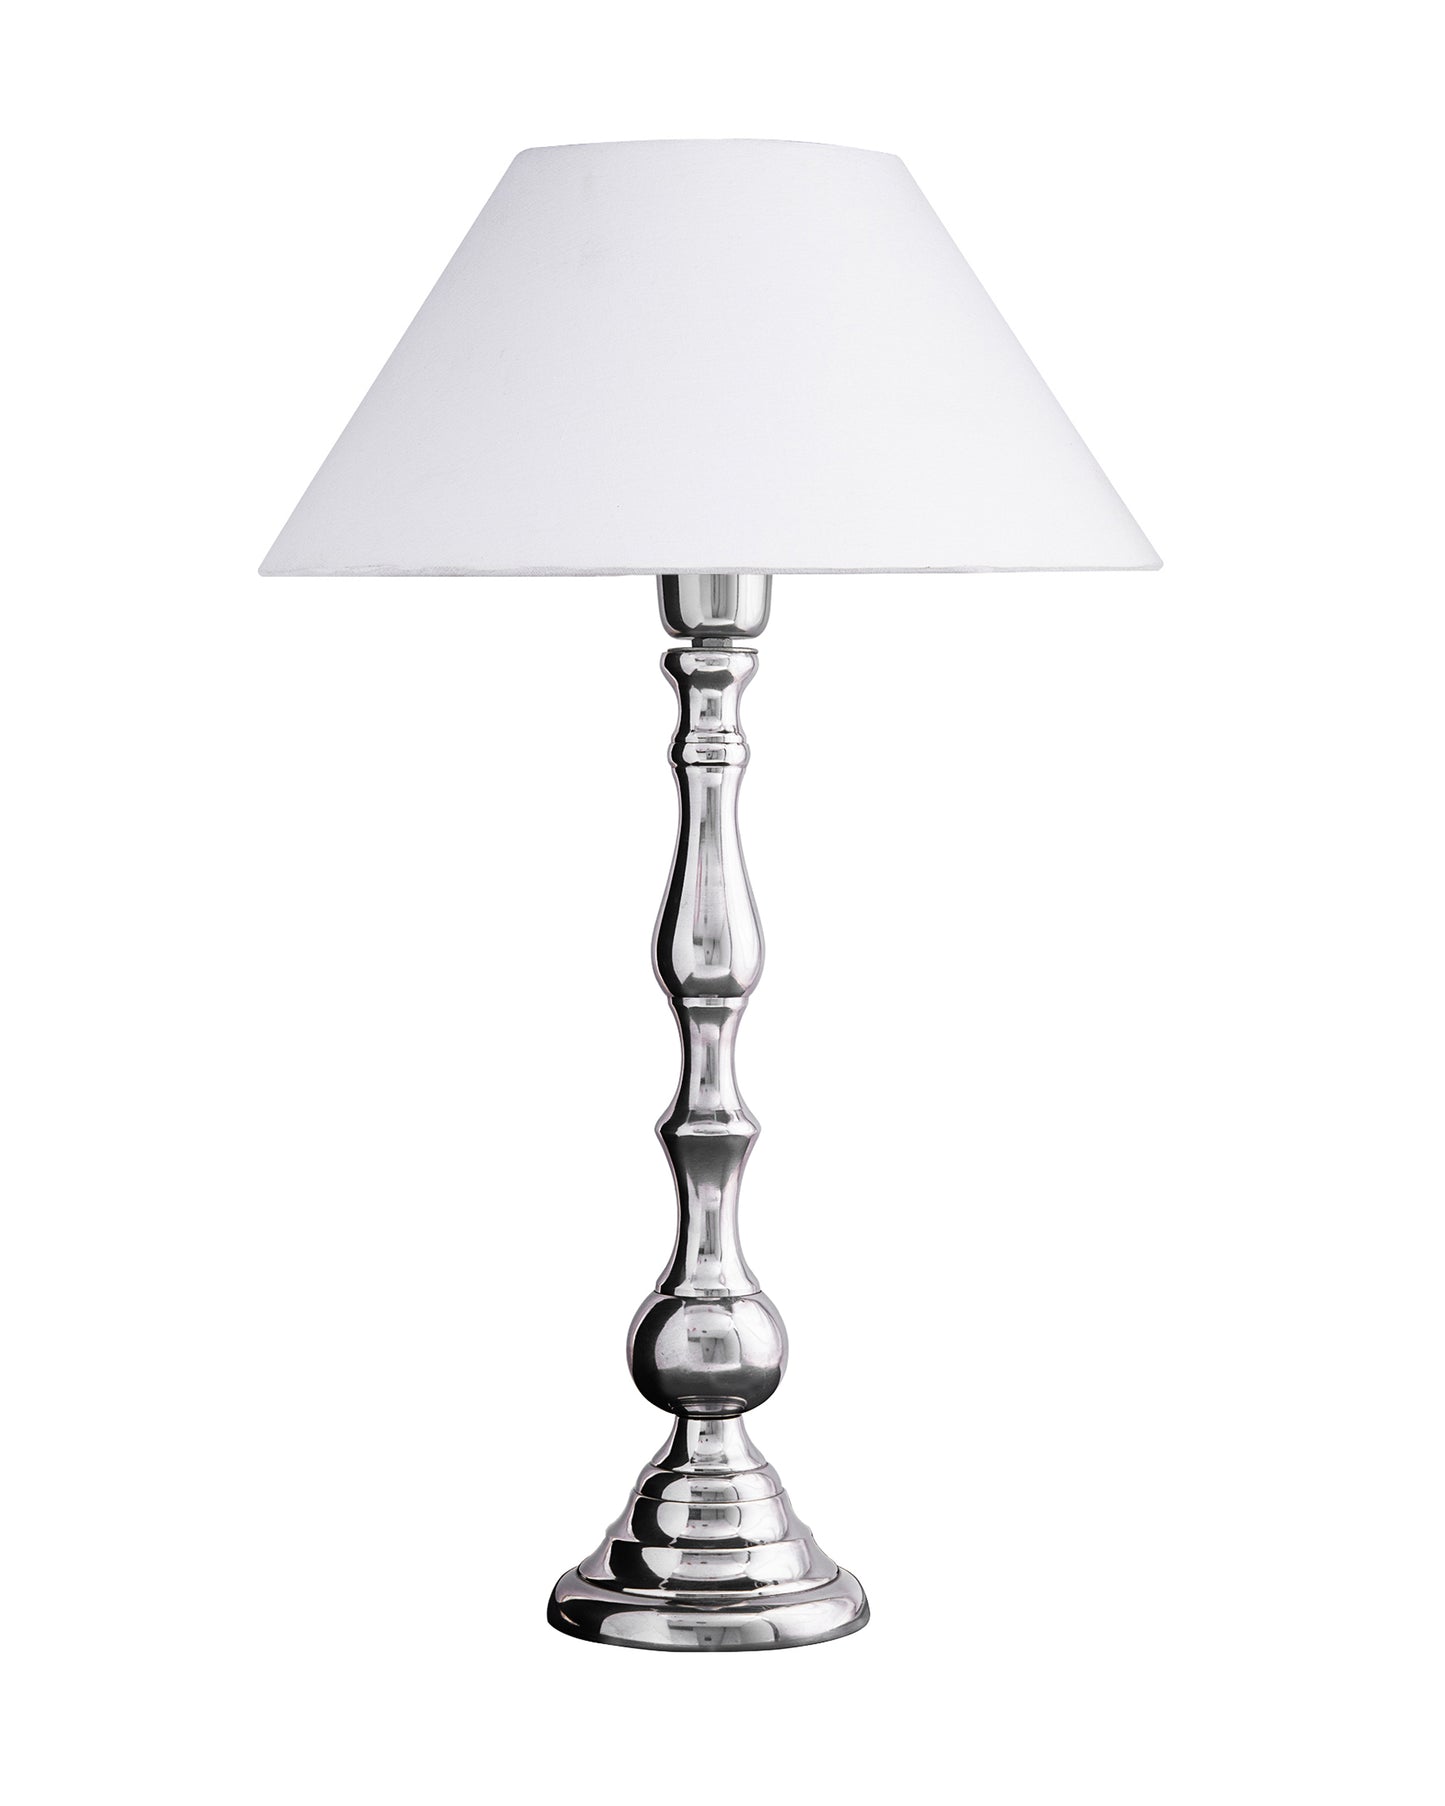 Teardrop chrome lamp with shade